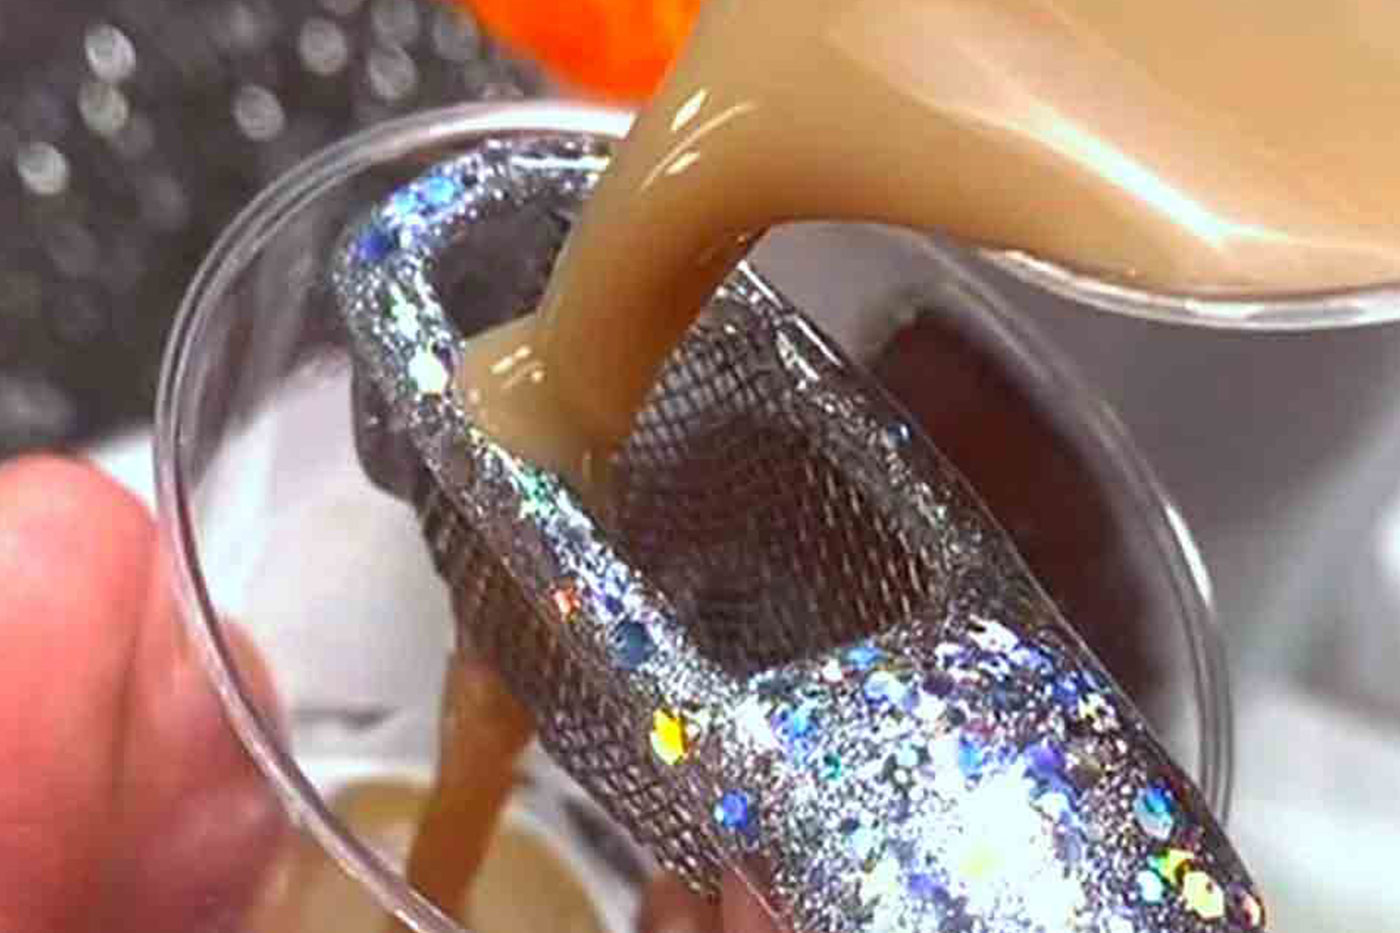 Viral video shows tea being strained through a ‘nail seive’